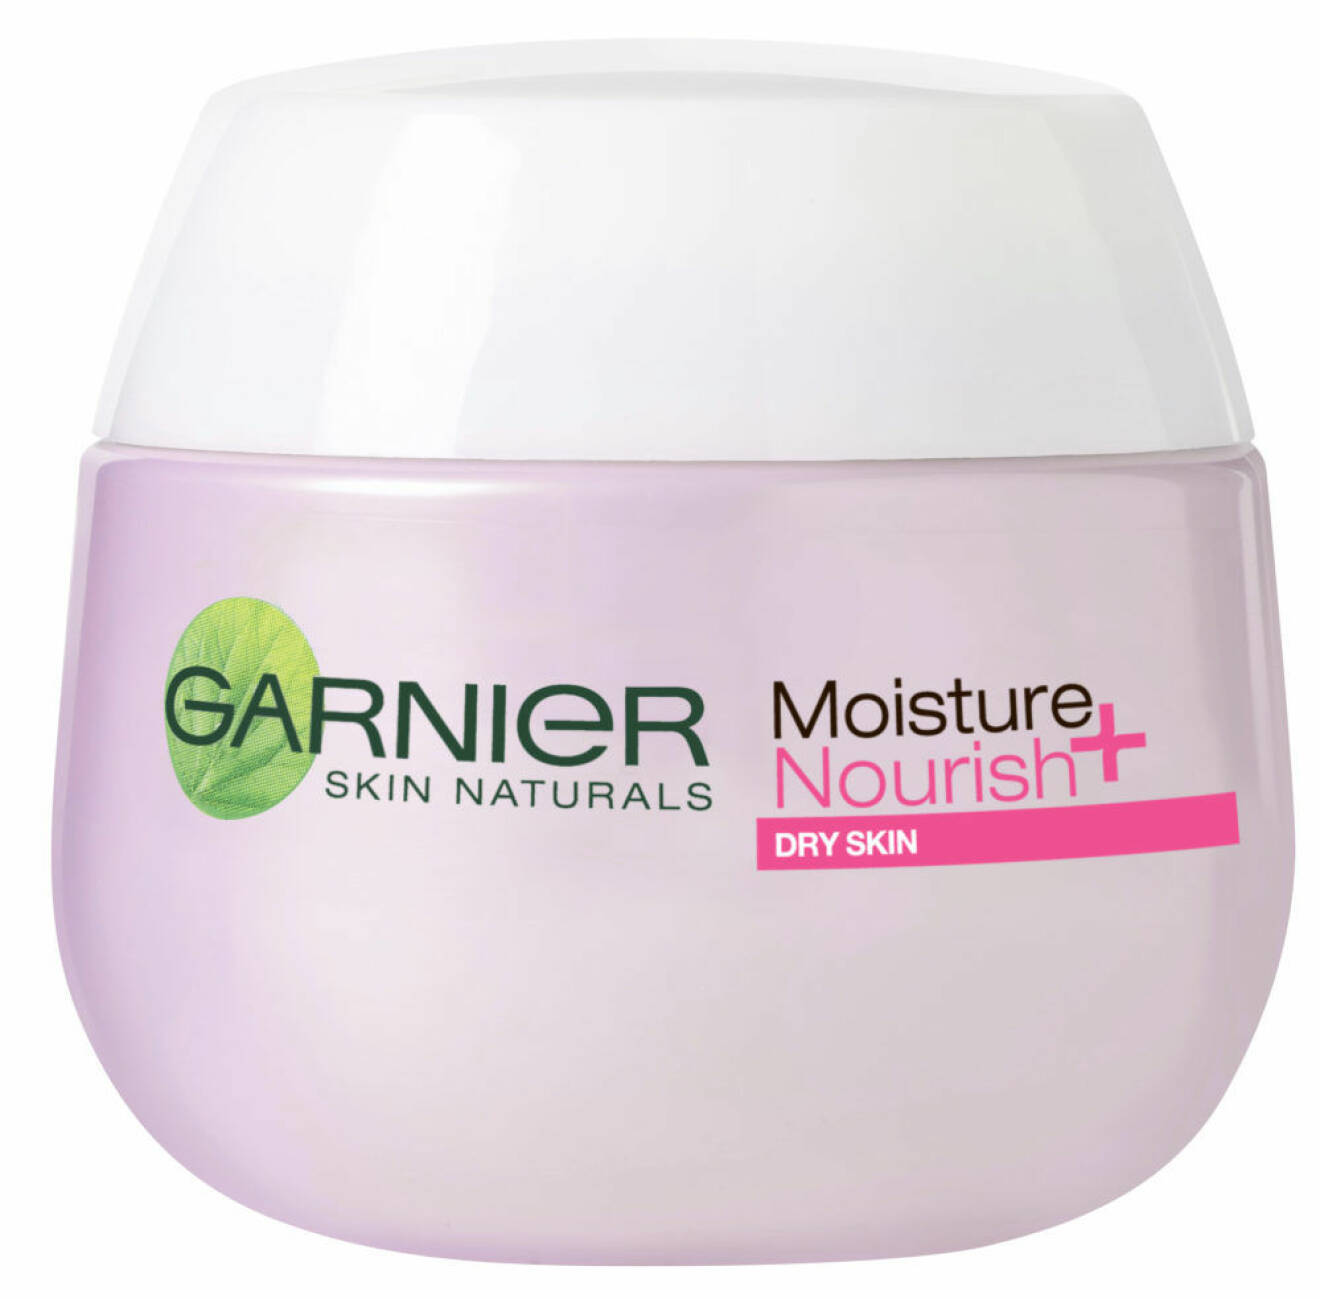 Moisture + Nourish Dry Skin Jar